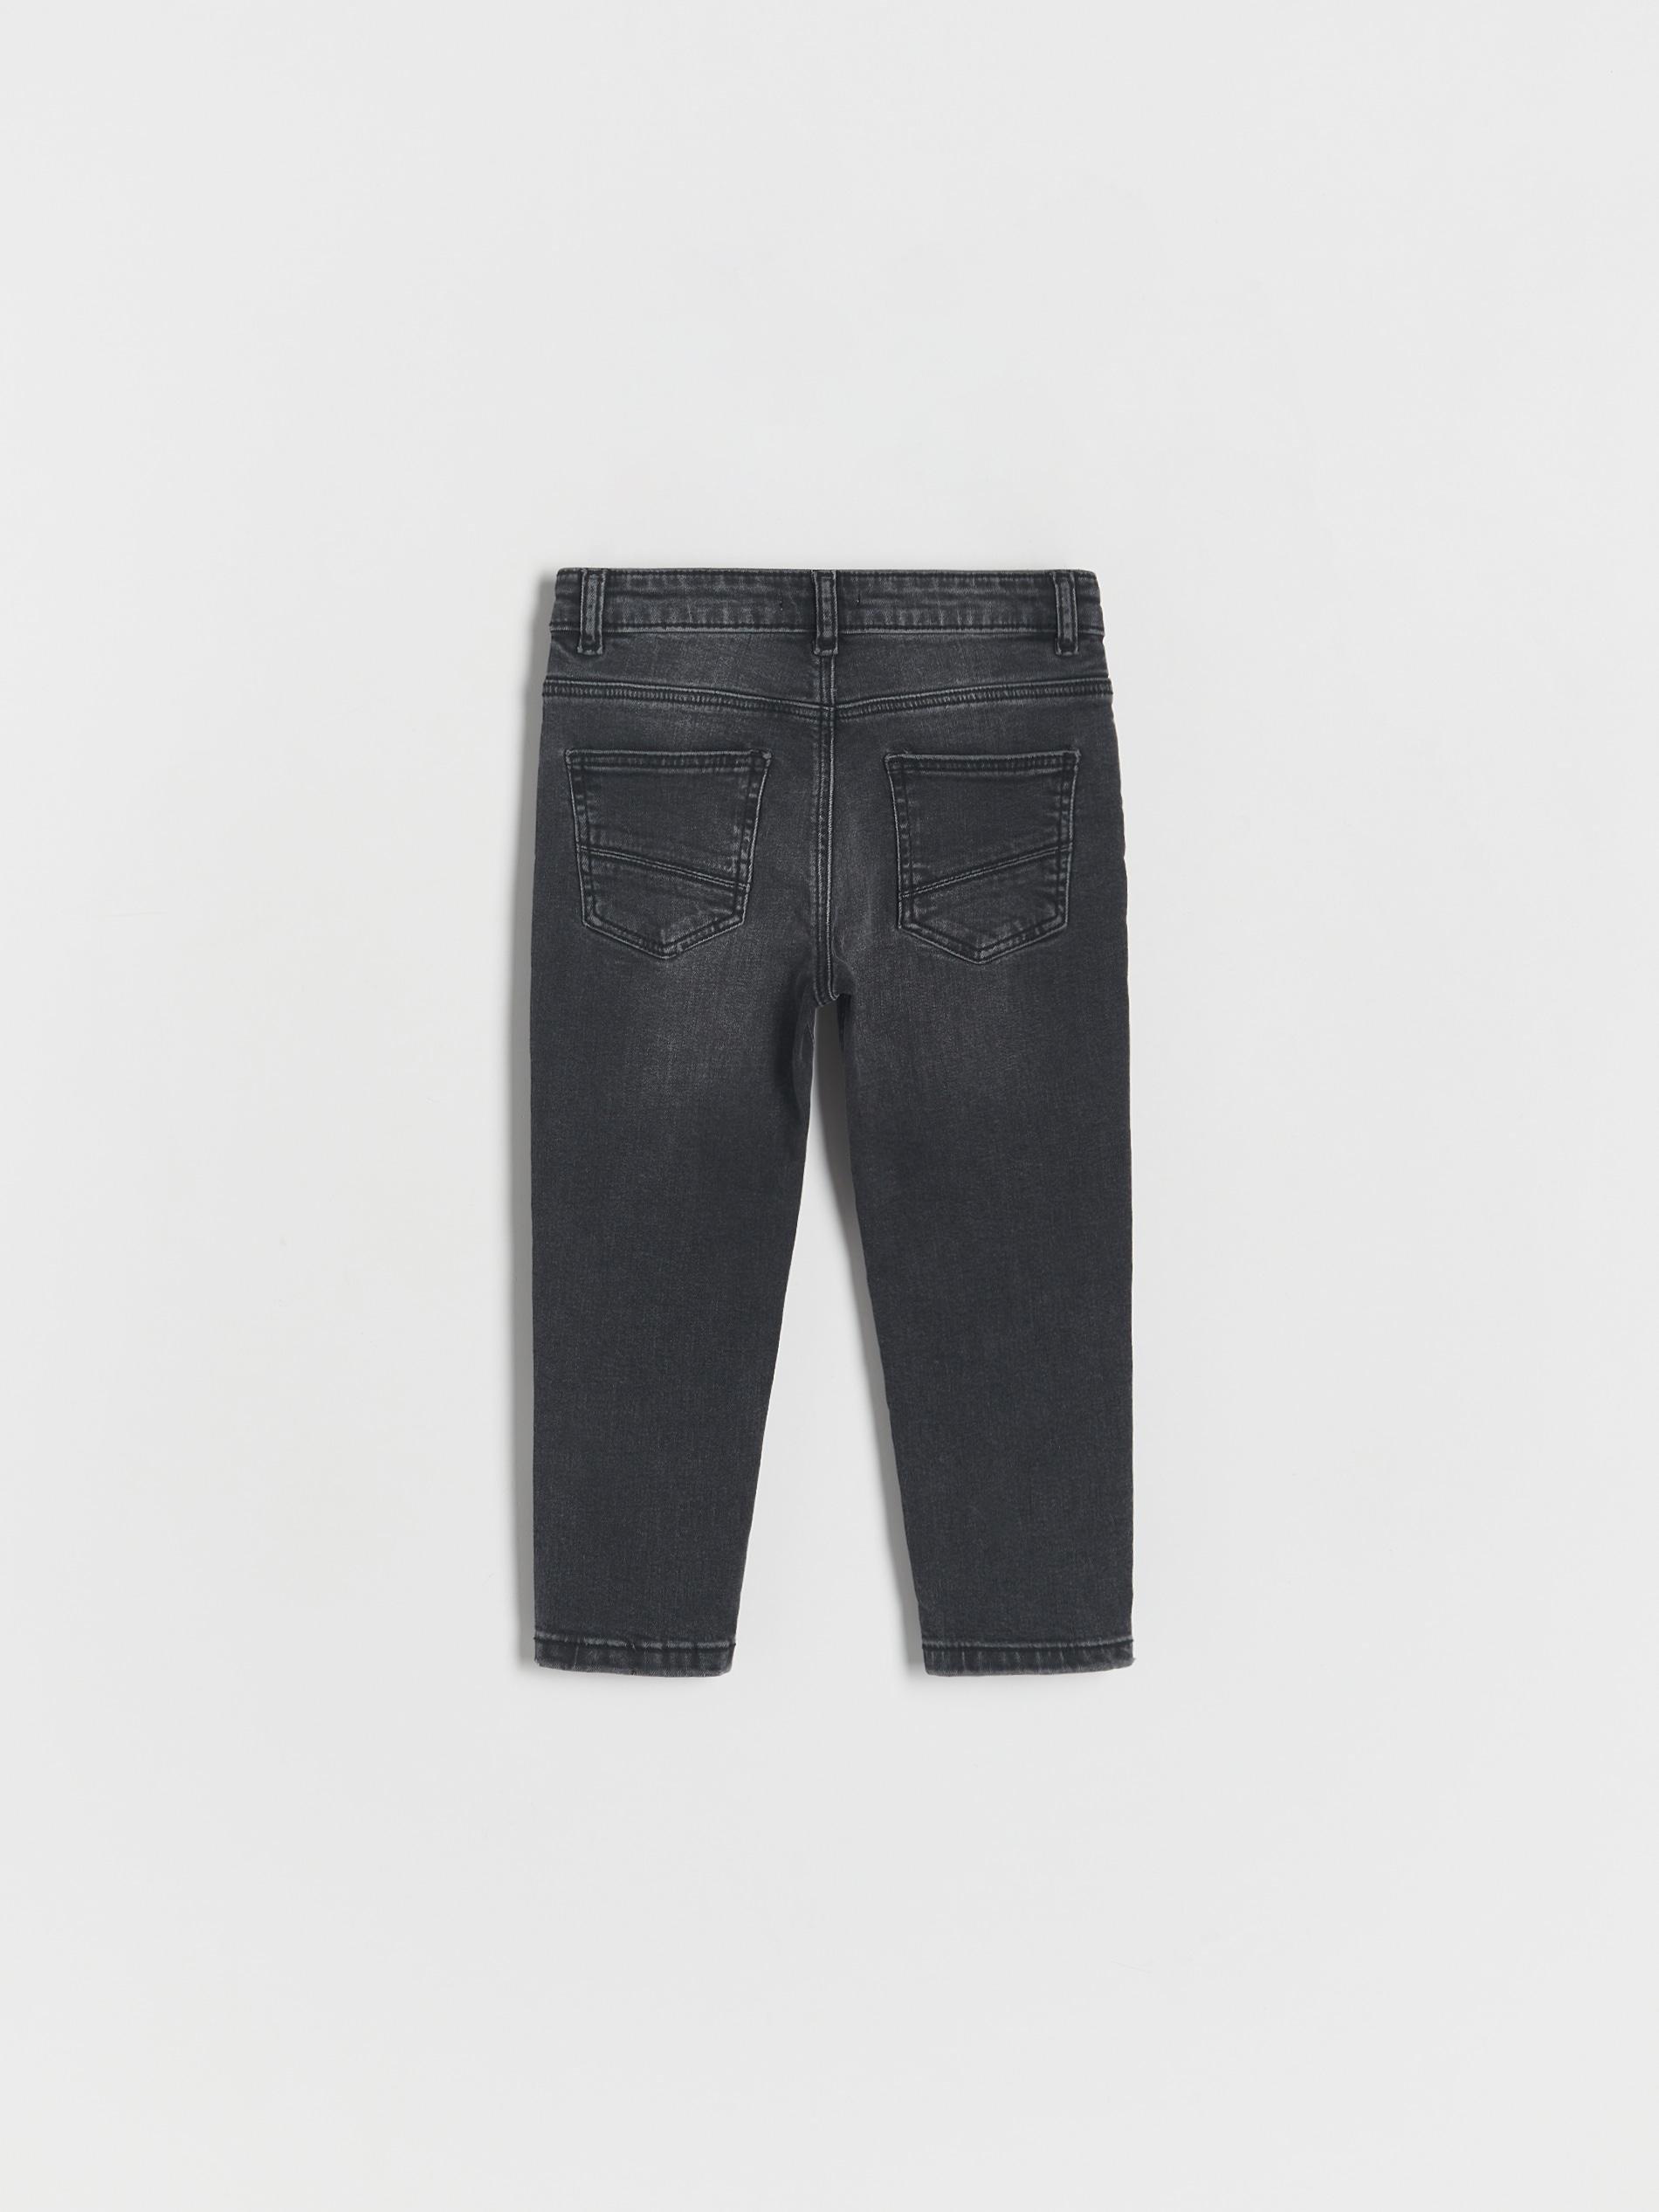 Reserved - Black Elastic Regular Jeans, Kids Boys